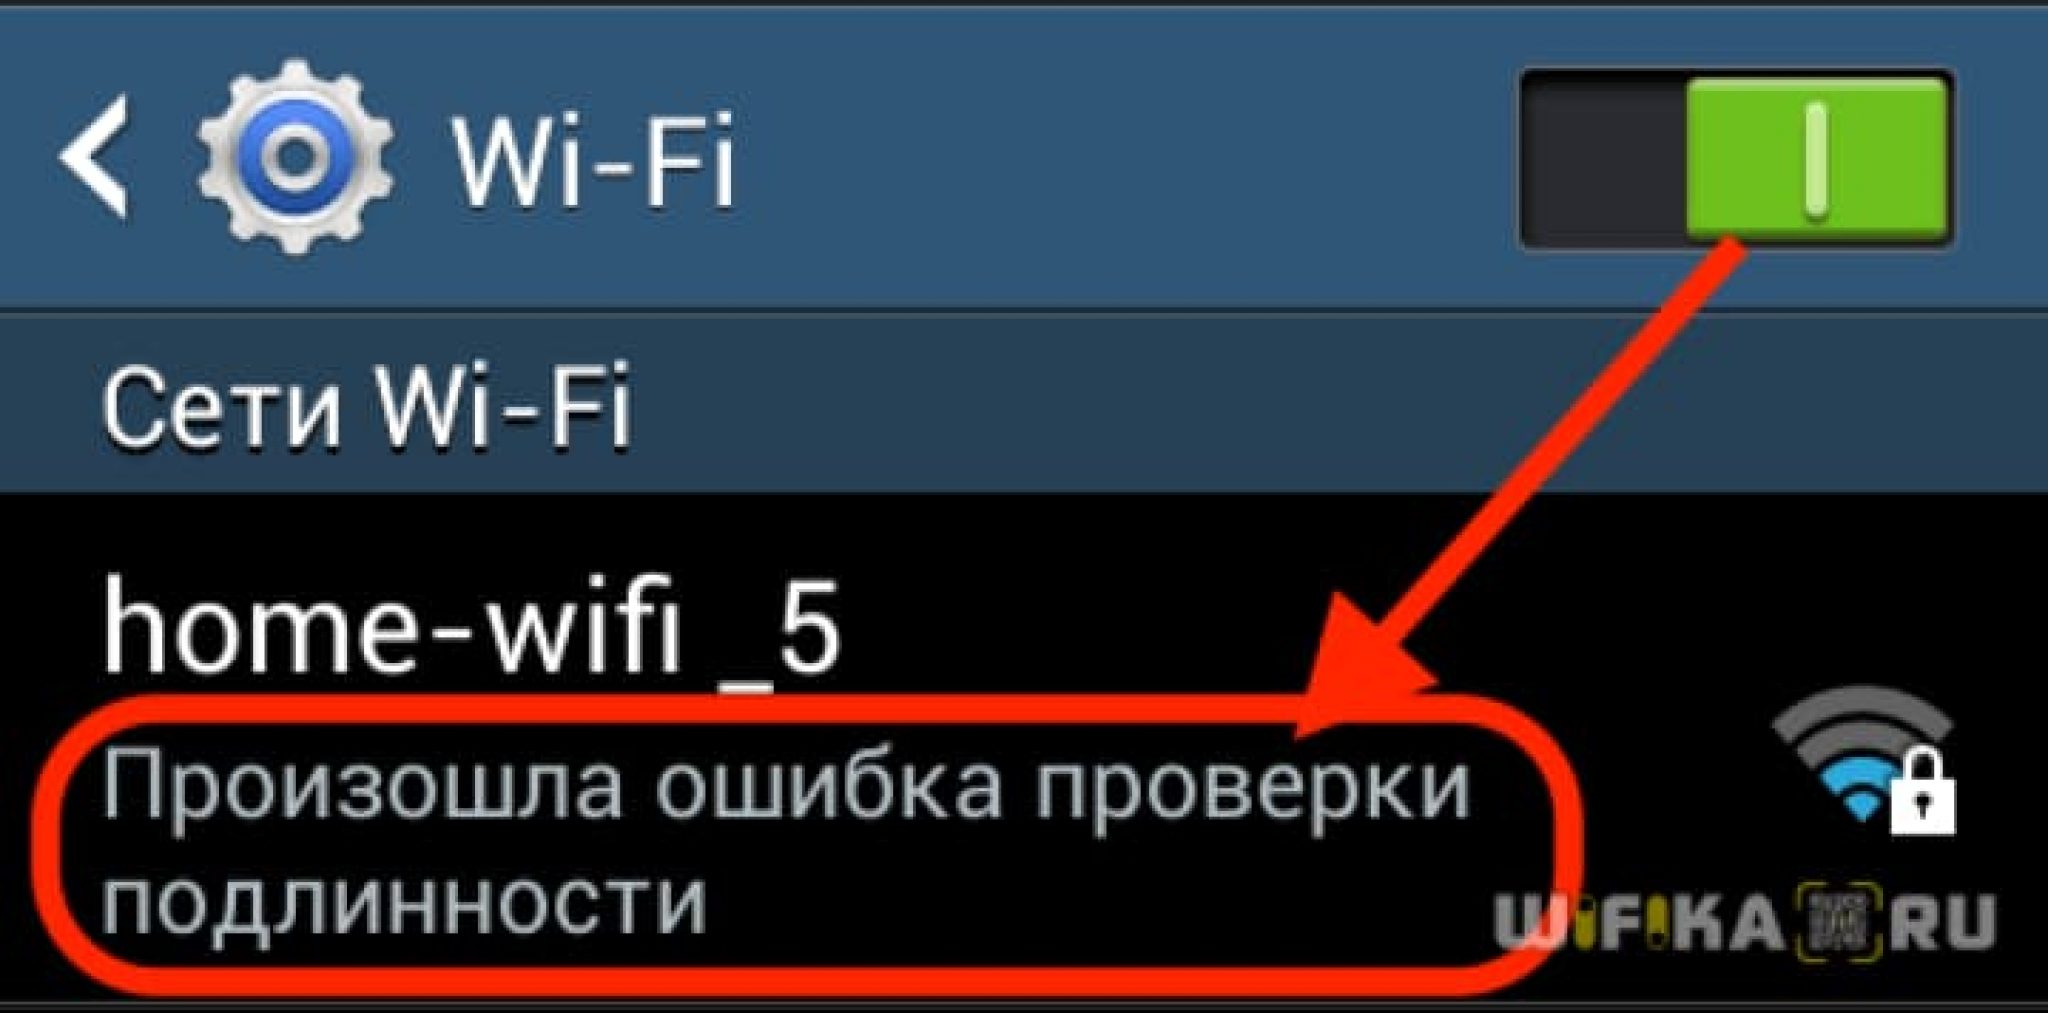 Ошибка wifi на телефоне. Произошла ошибка проверки подлинности. Проверка подлинности WIFI. Произошла ошибка подлинности WIFI на телефоне. Произошла ошибка проверки подлинности при подключении WIFI.